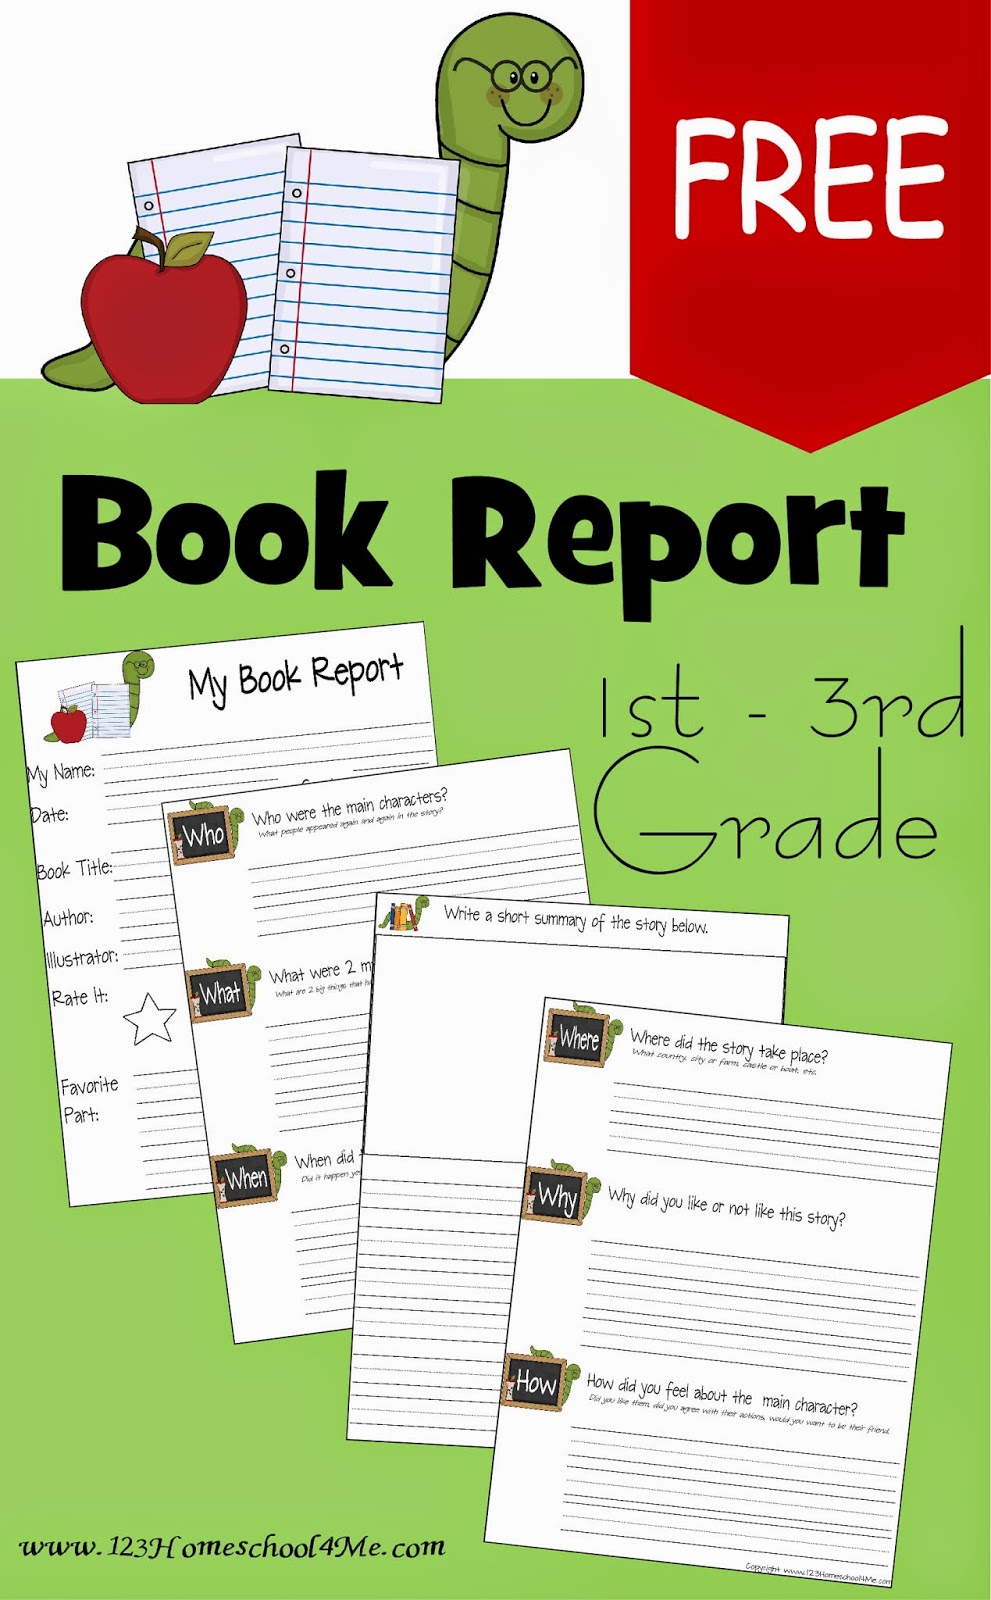 FREE Book Report Template - Educational Freebies With 2nd Grade Book Report Template